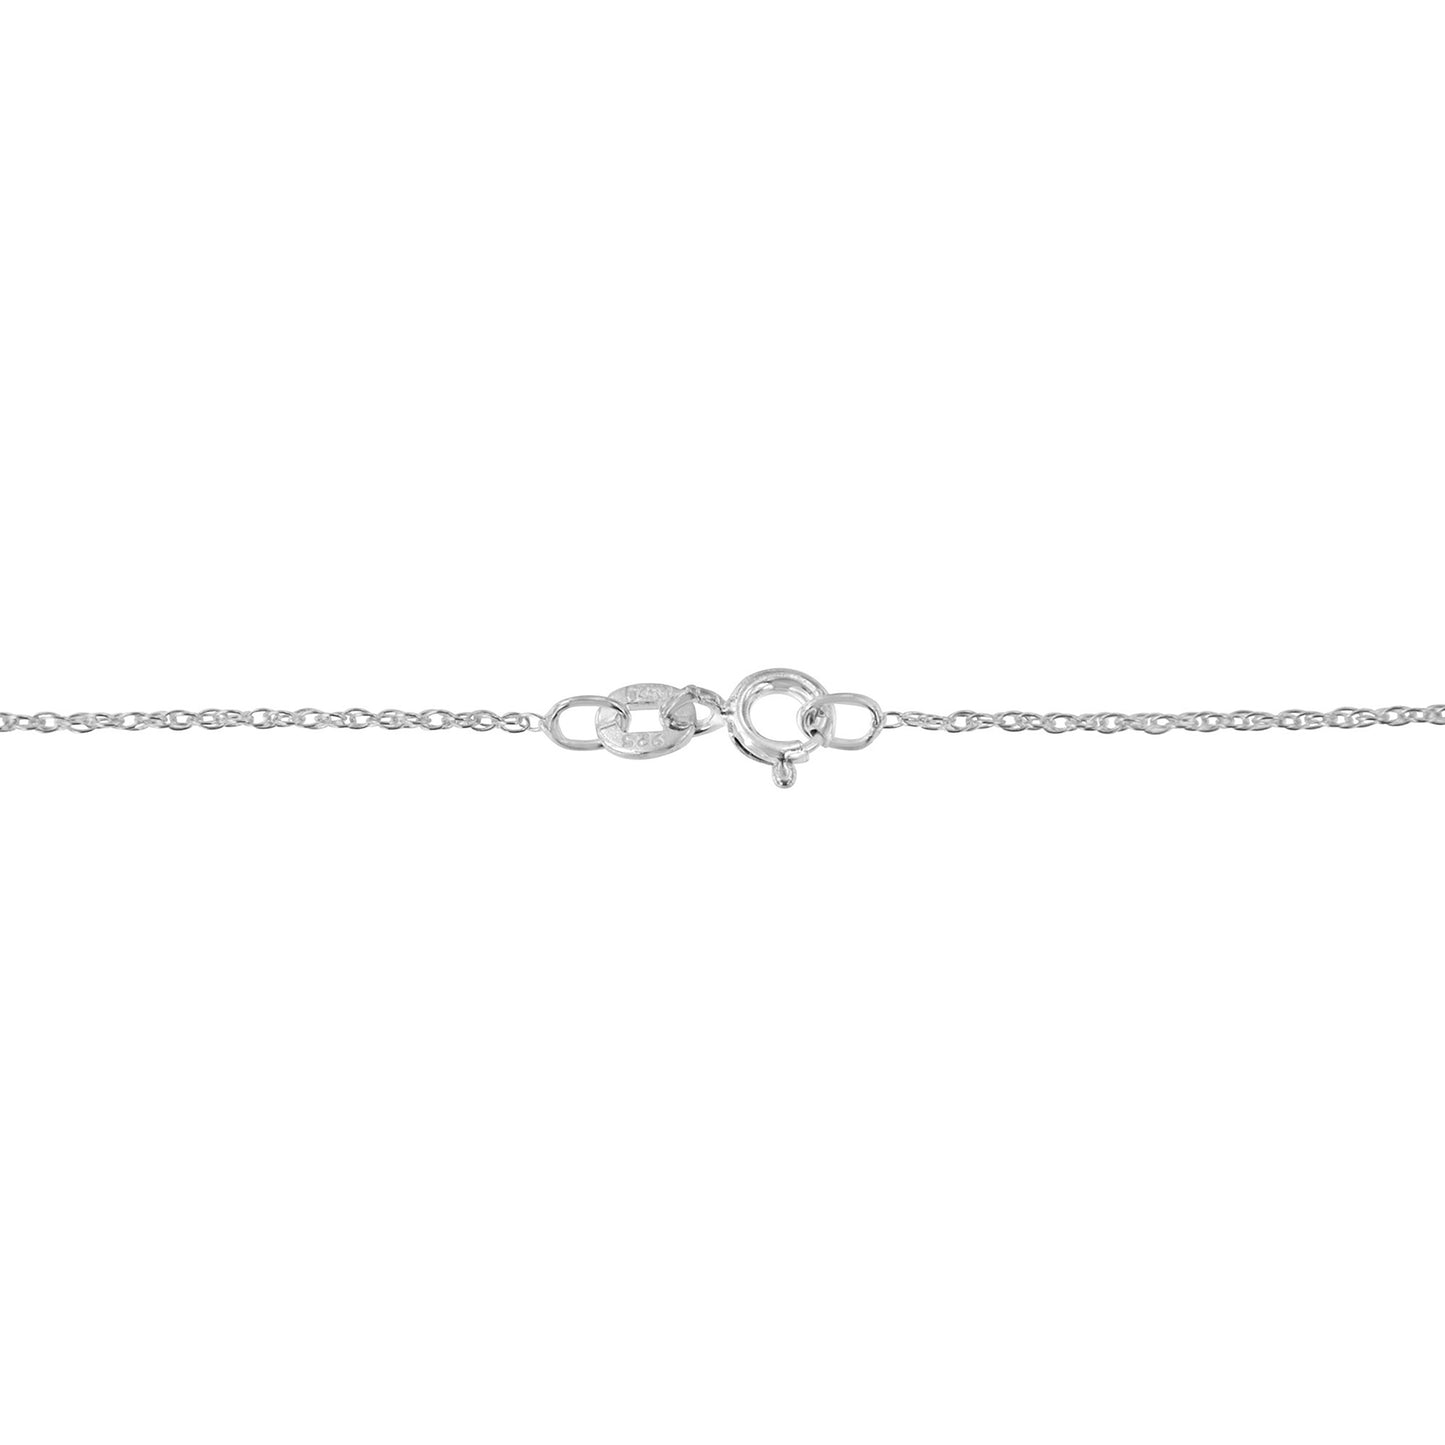 1/10 Carat Round Brilliant-Cut Diamond Modern Bezel-Set Solitaire Pendant Necklace in 10K Rose Gold